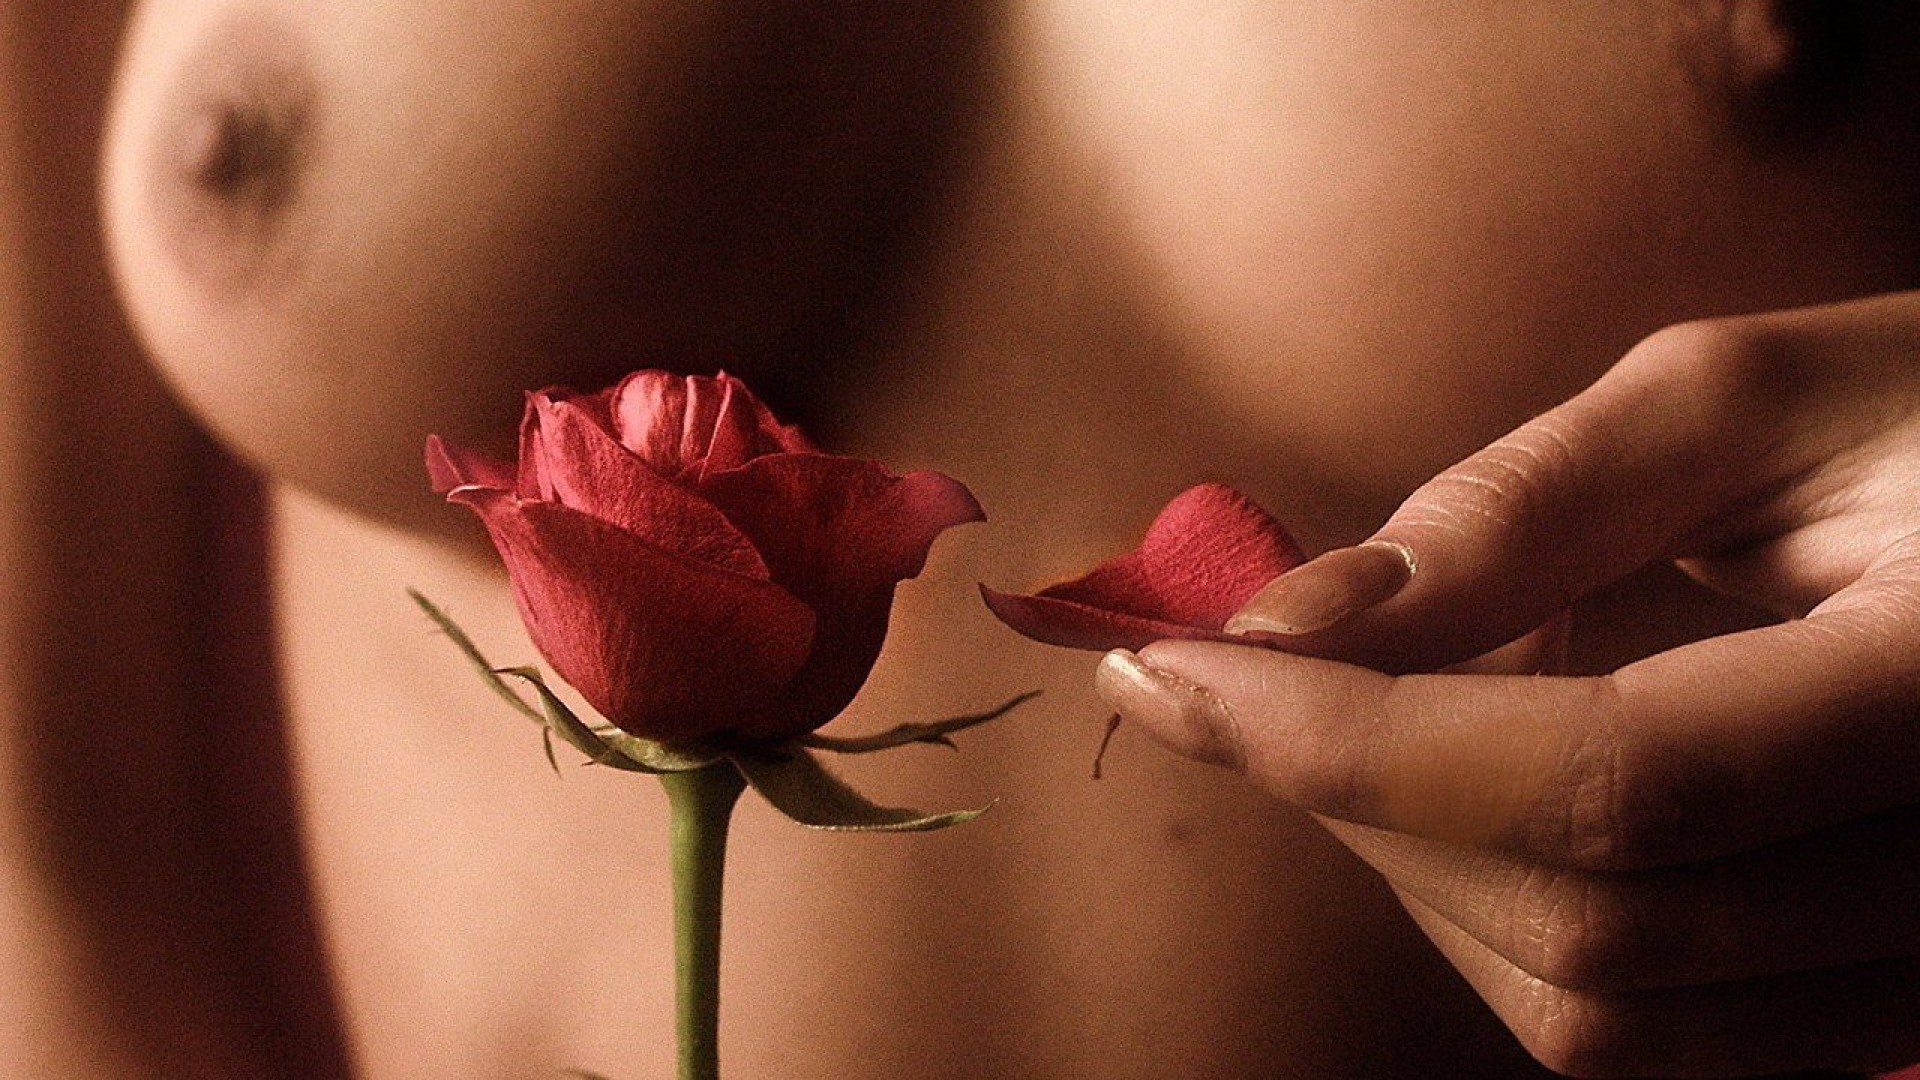 Naomi Fisher's Erotic Botanical Photographs